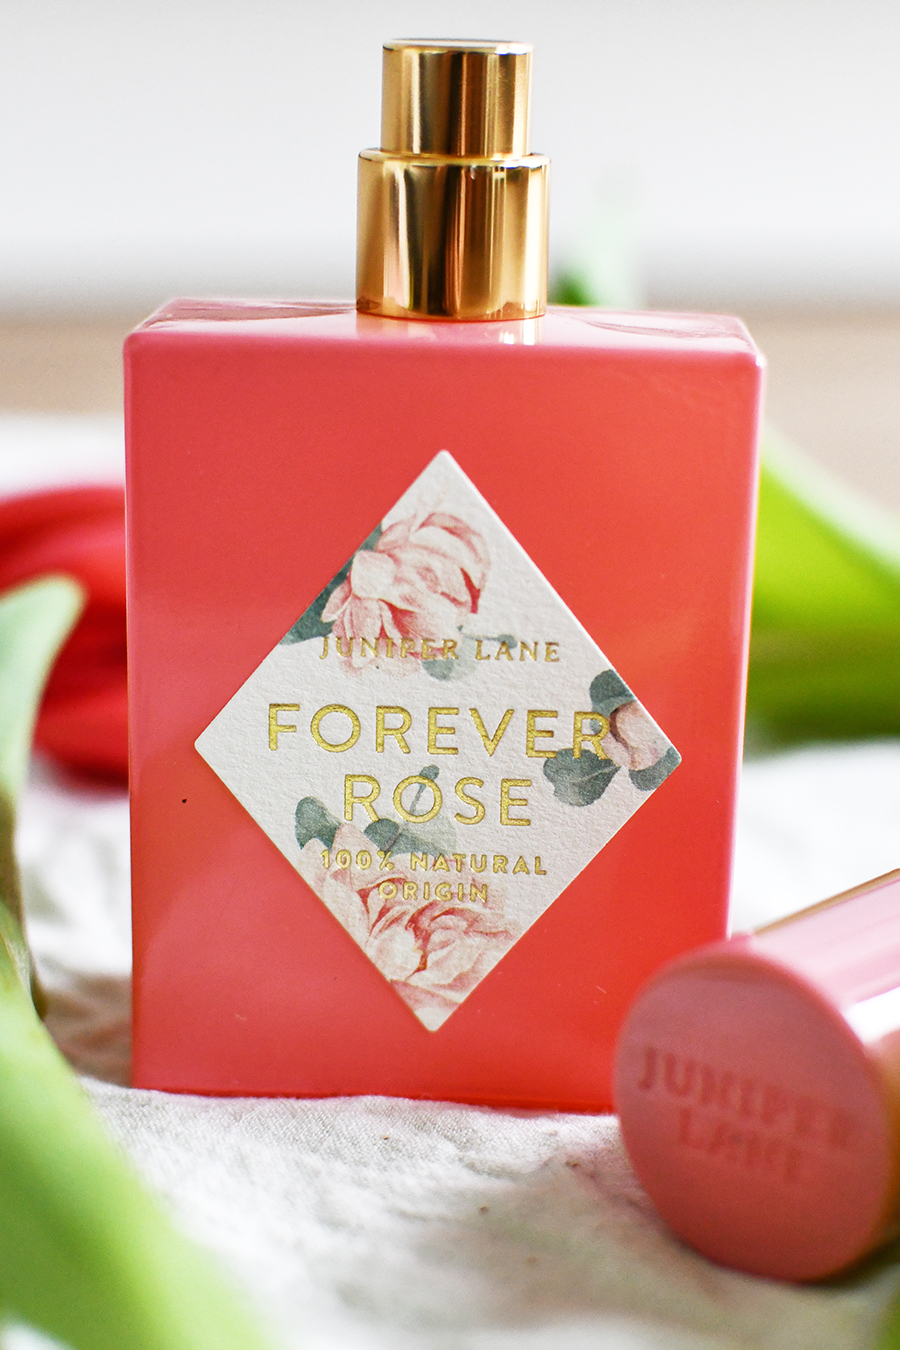 Juniper Lane "Forever Rose" Parfum